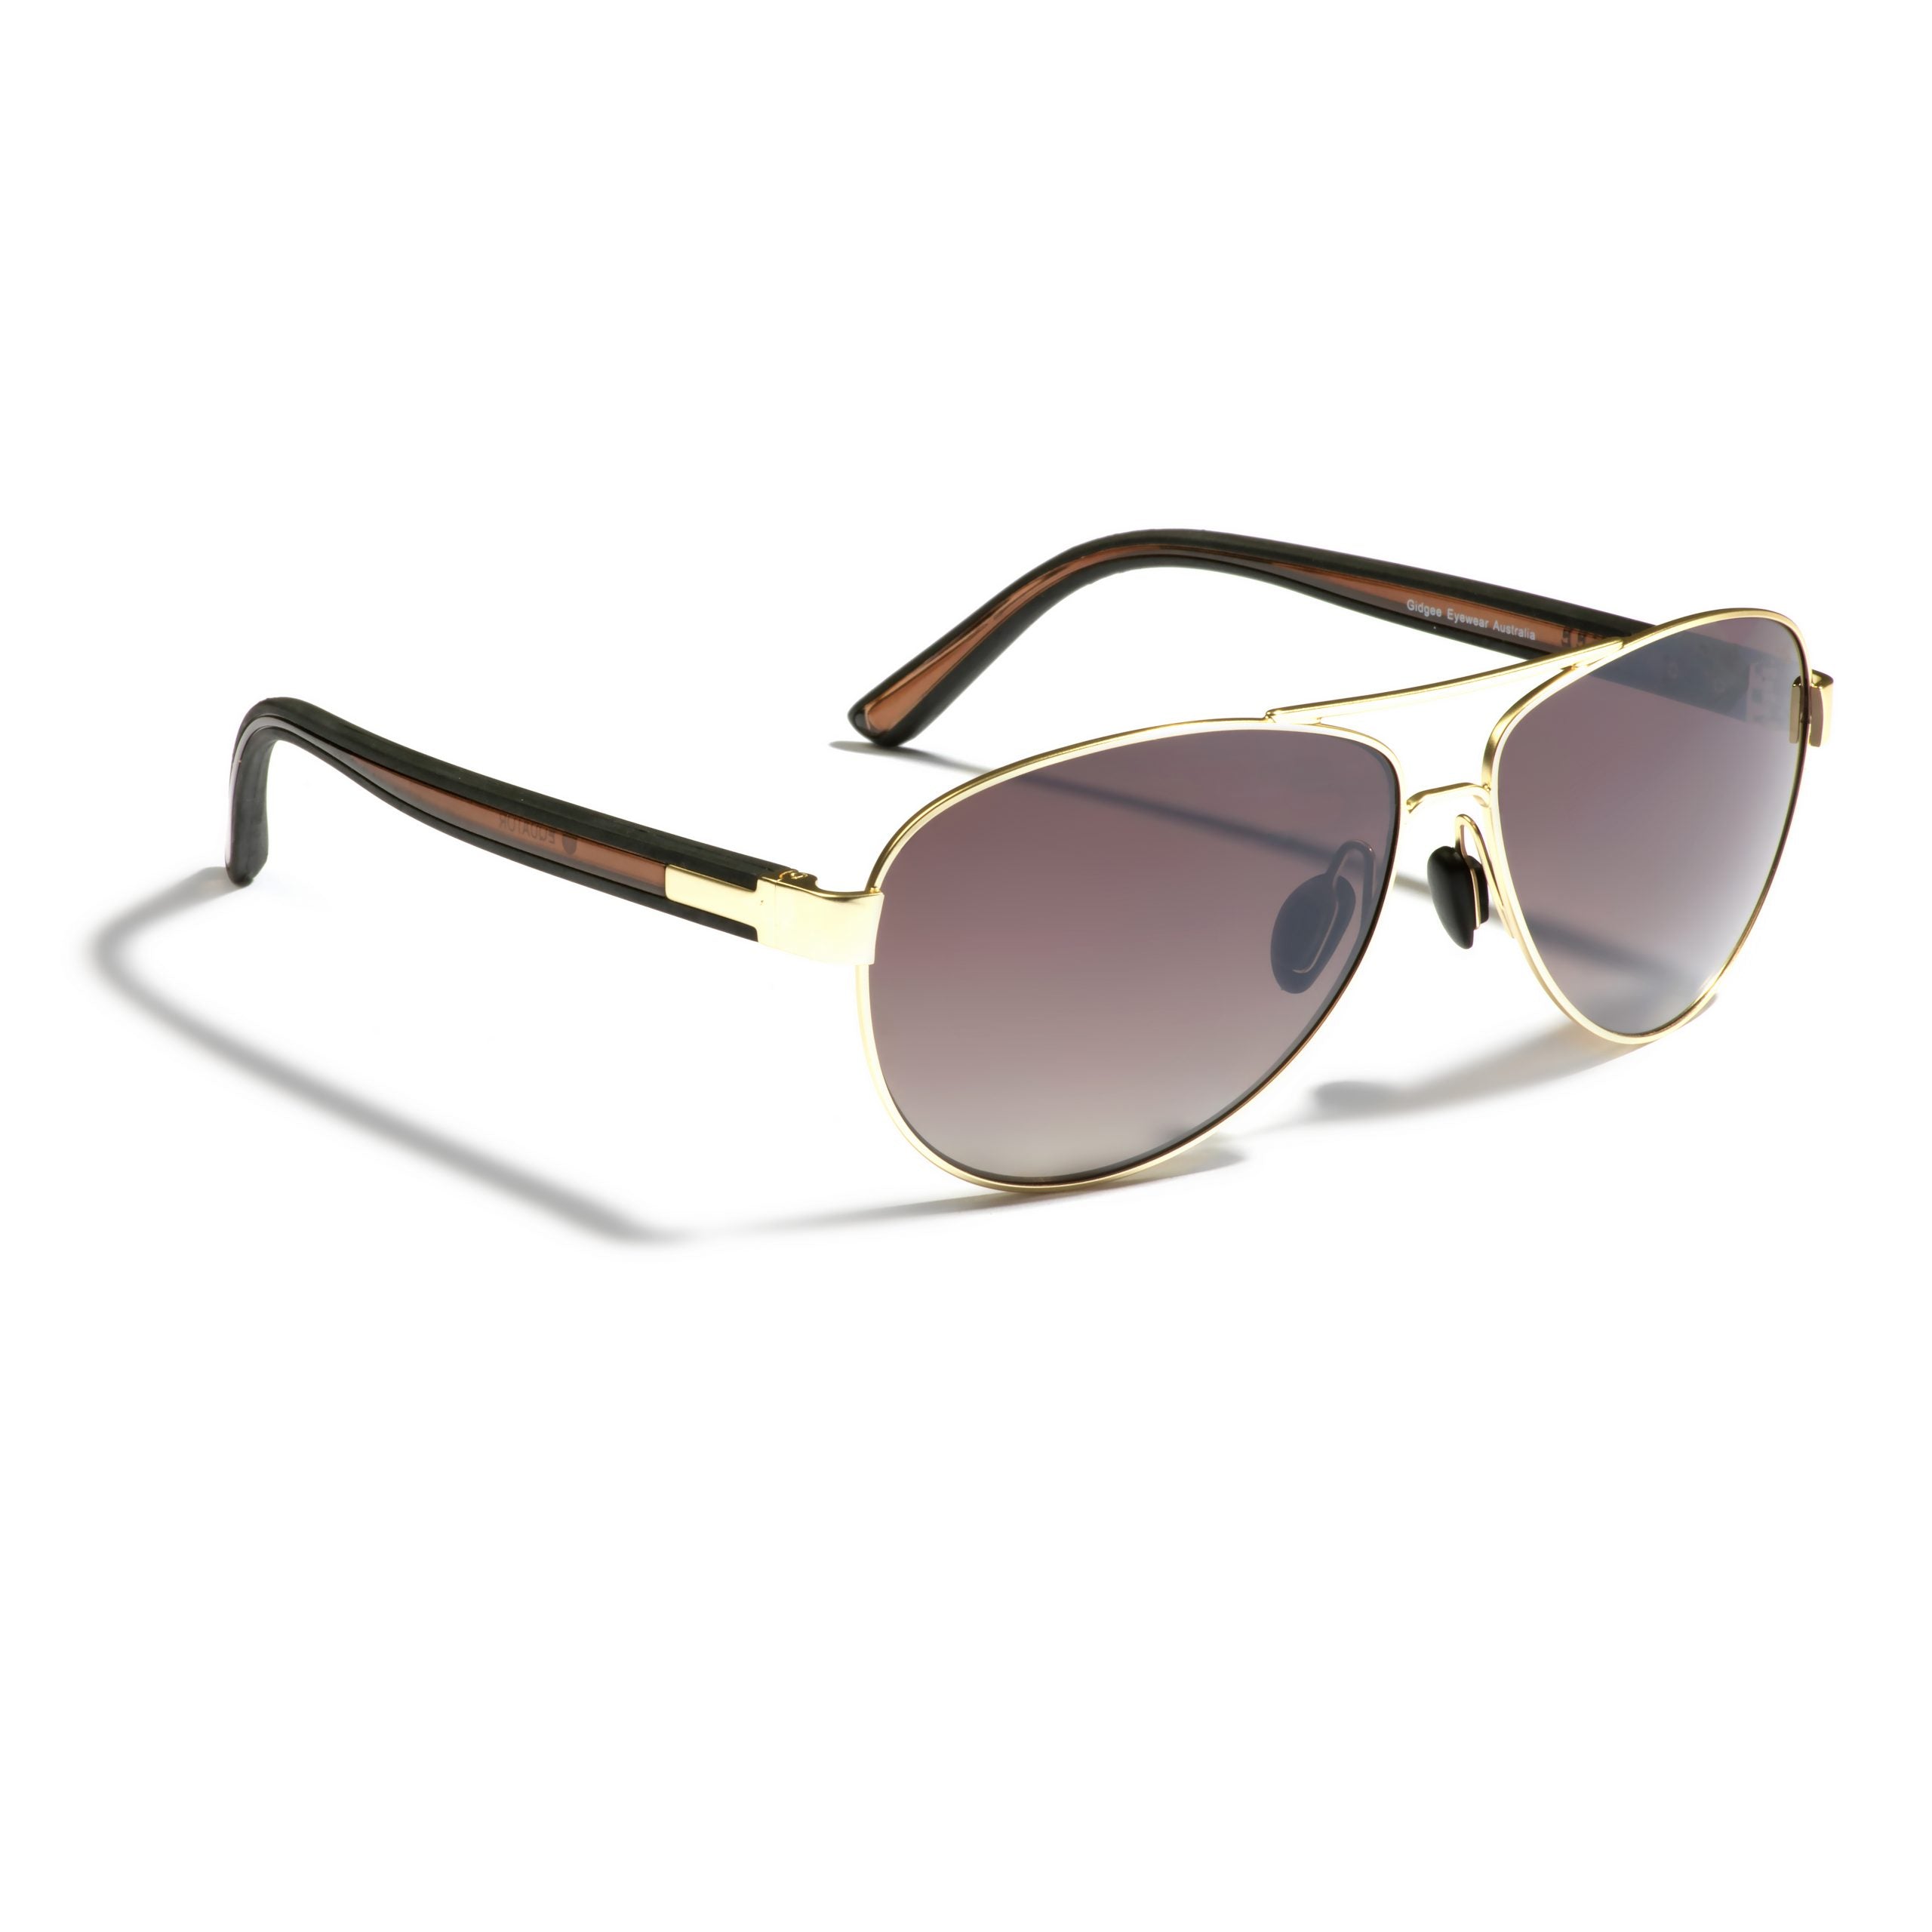 Gidgee Eyewear - Equator Bay Sunglasses